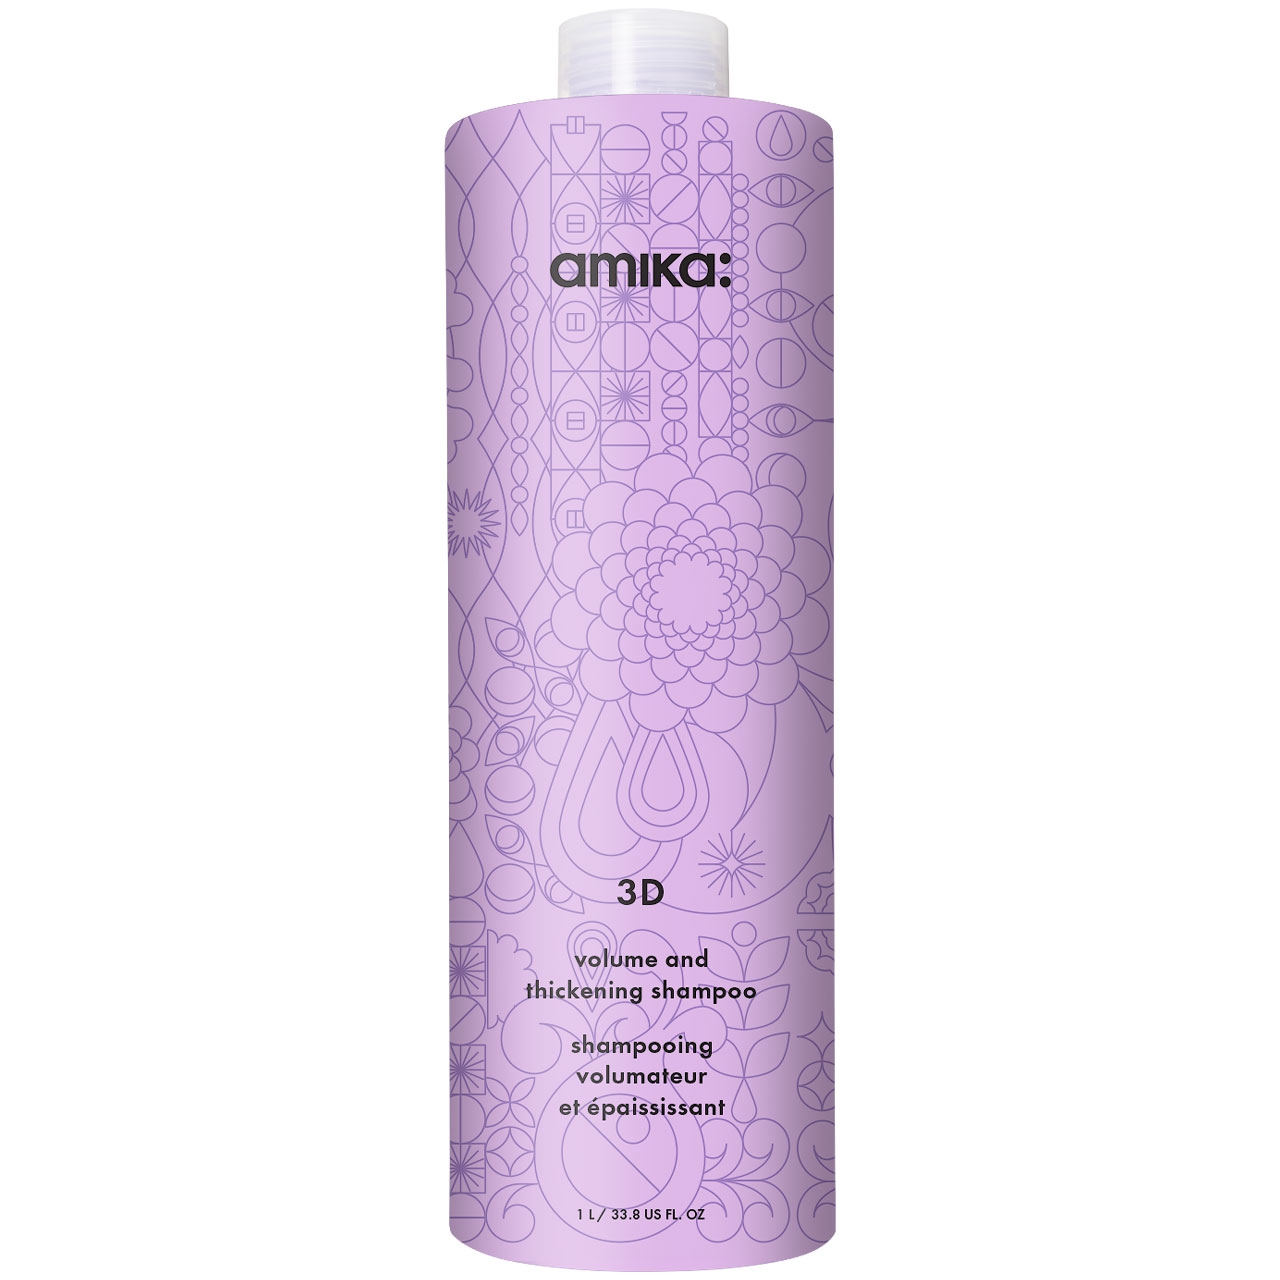 amika: 3D volume and thickening shampoo Liter